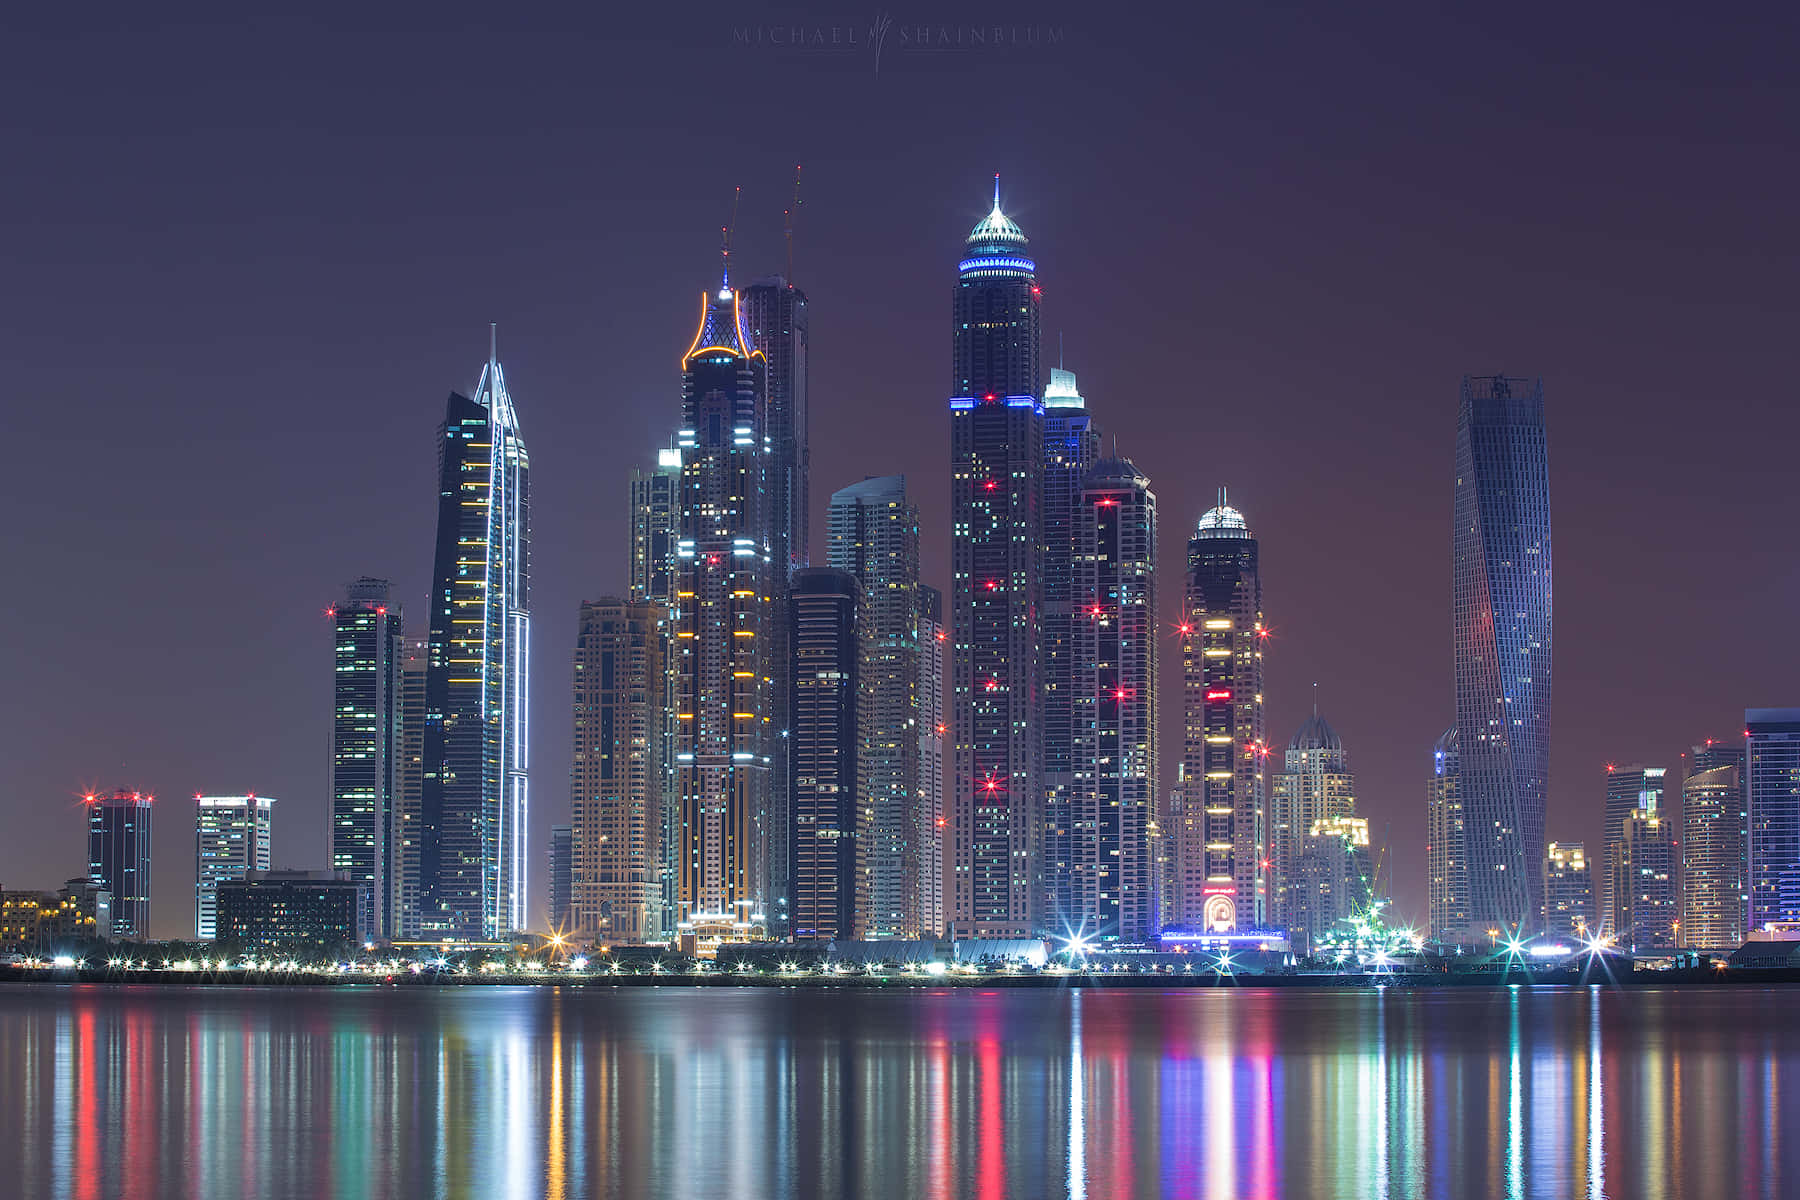 An ethereal view of Dubai's skyline